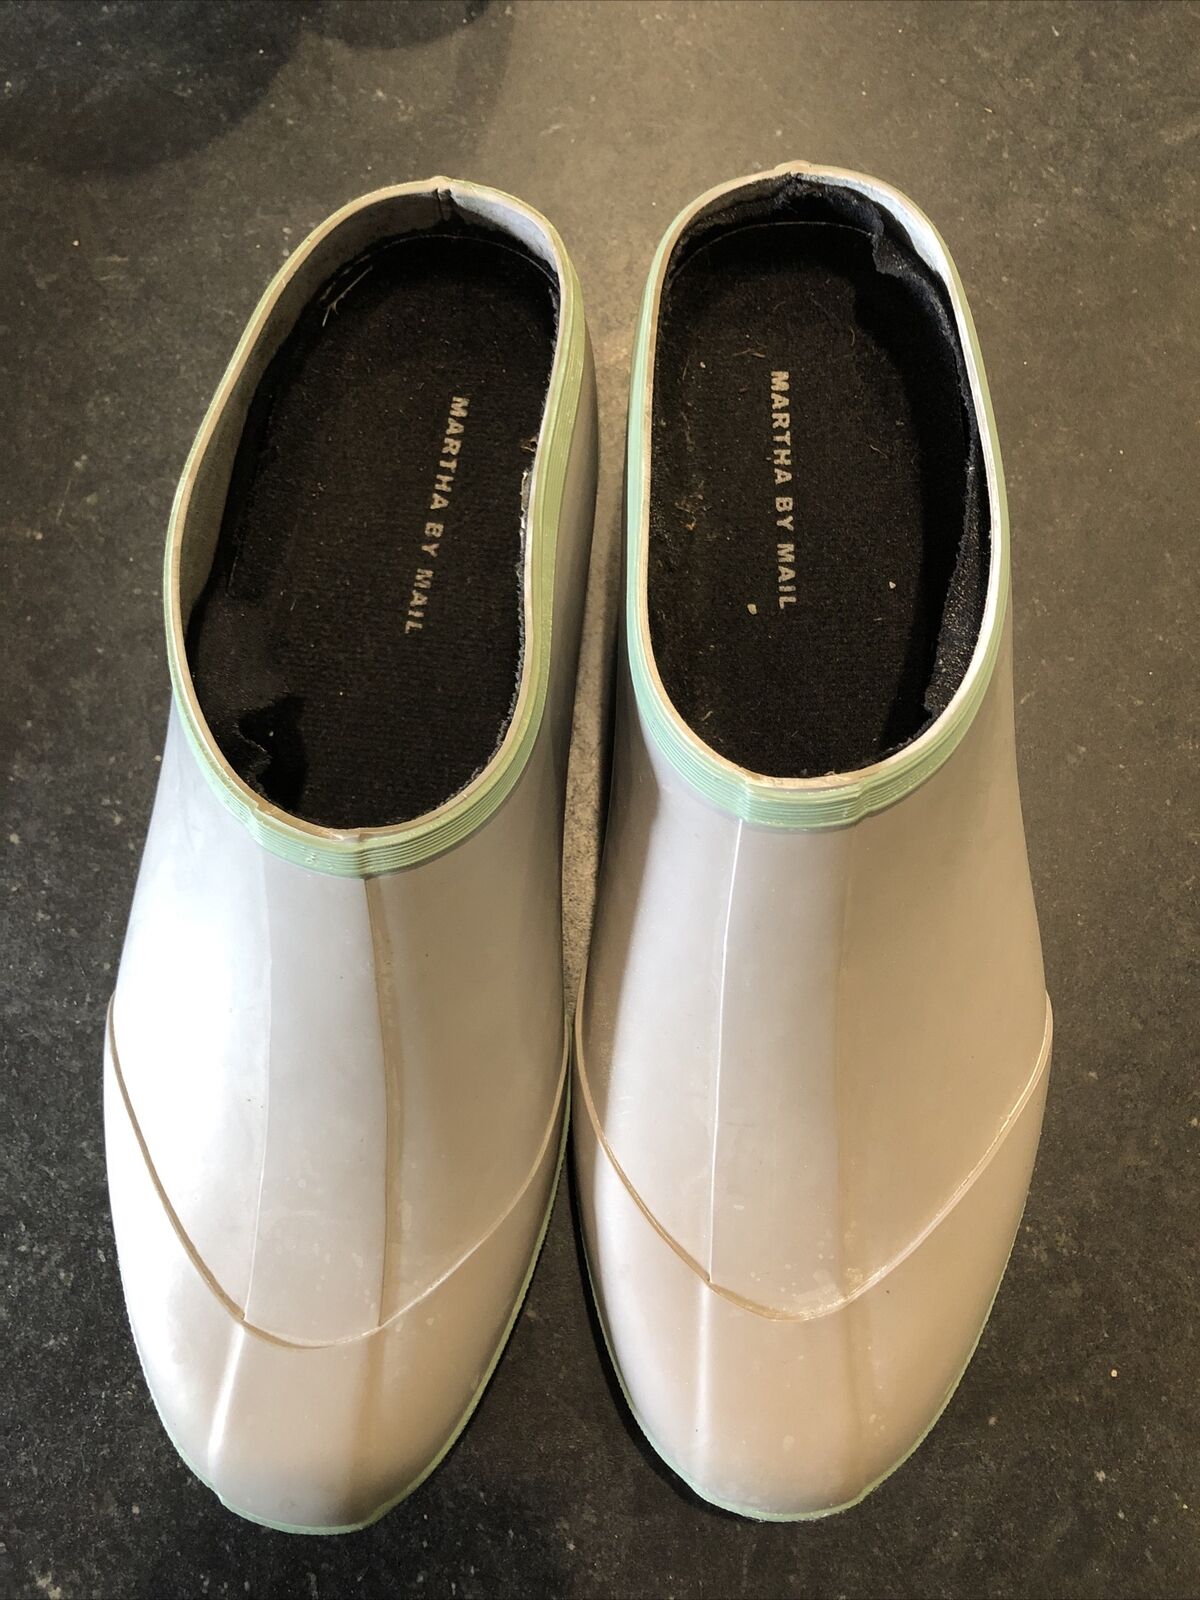 Martha By Mail (martha Stewart) Gardening Shoes Clogs Size 9